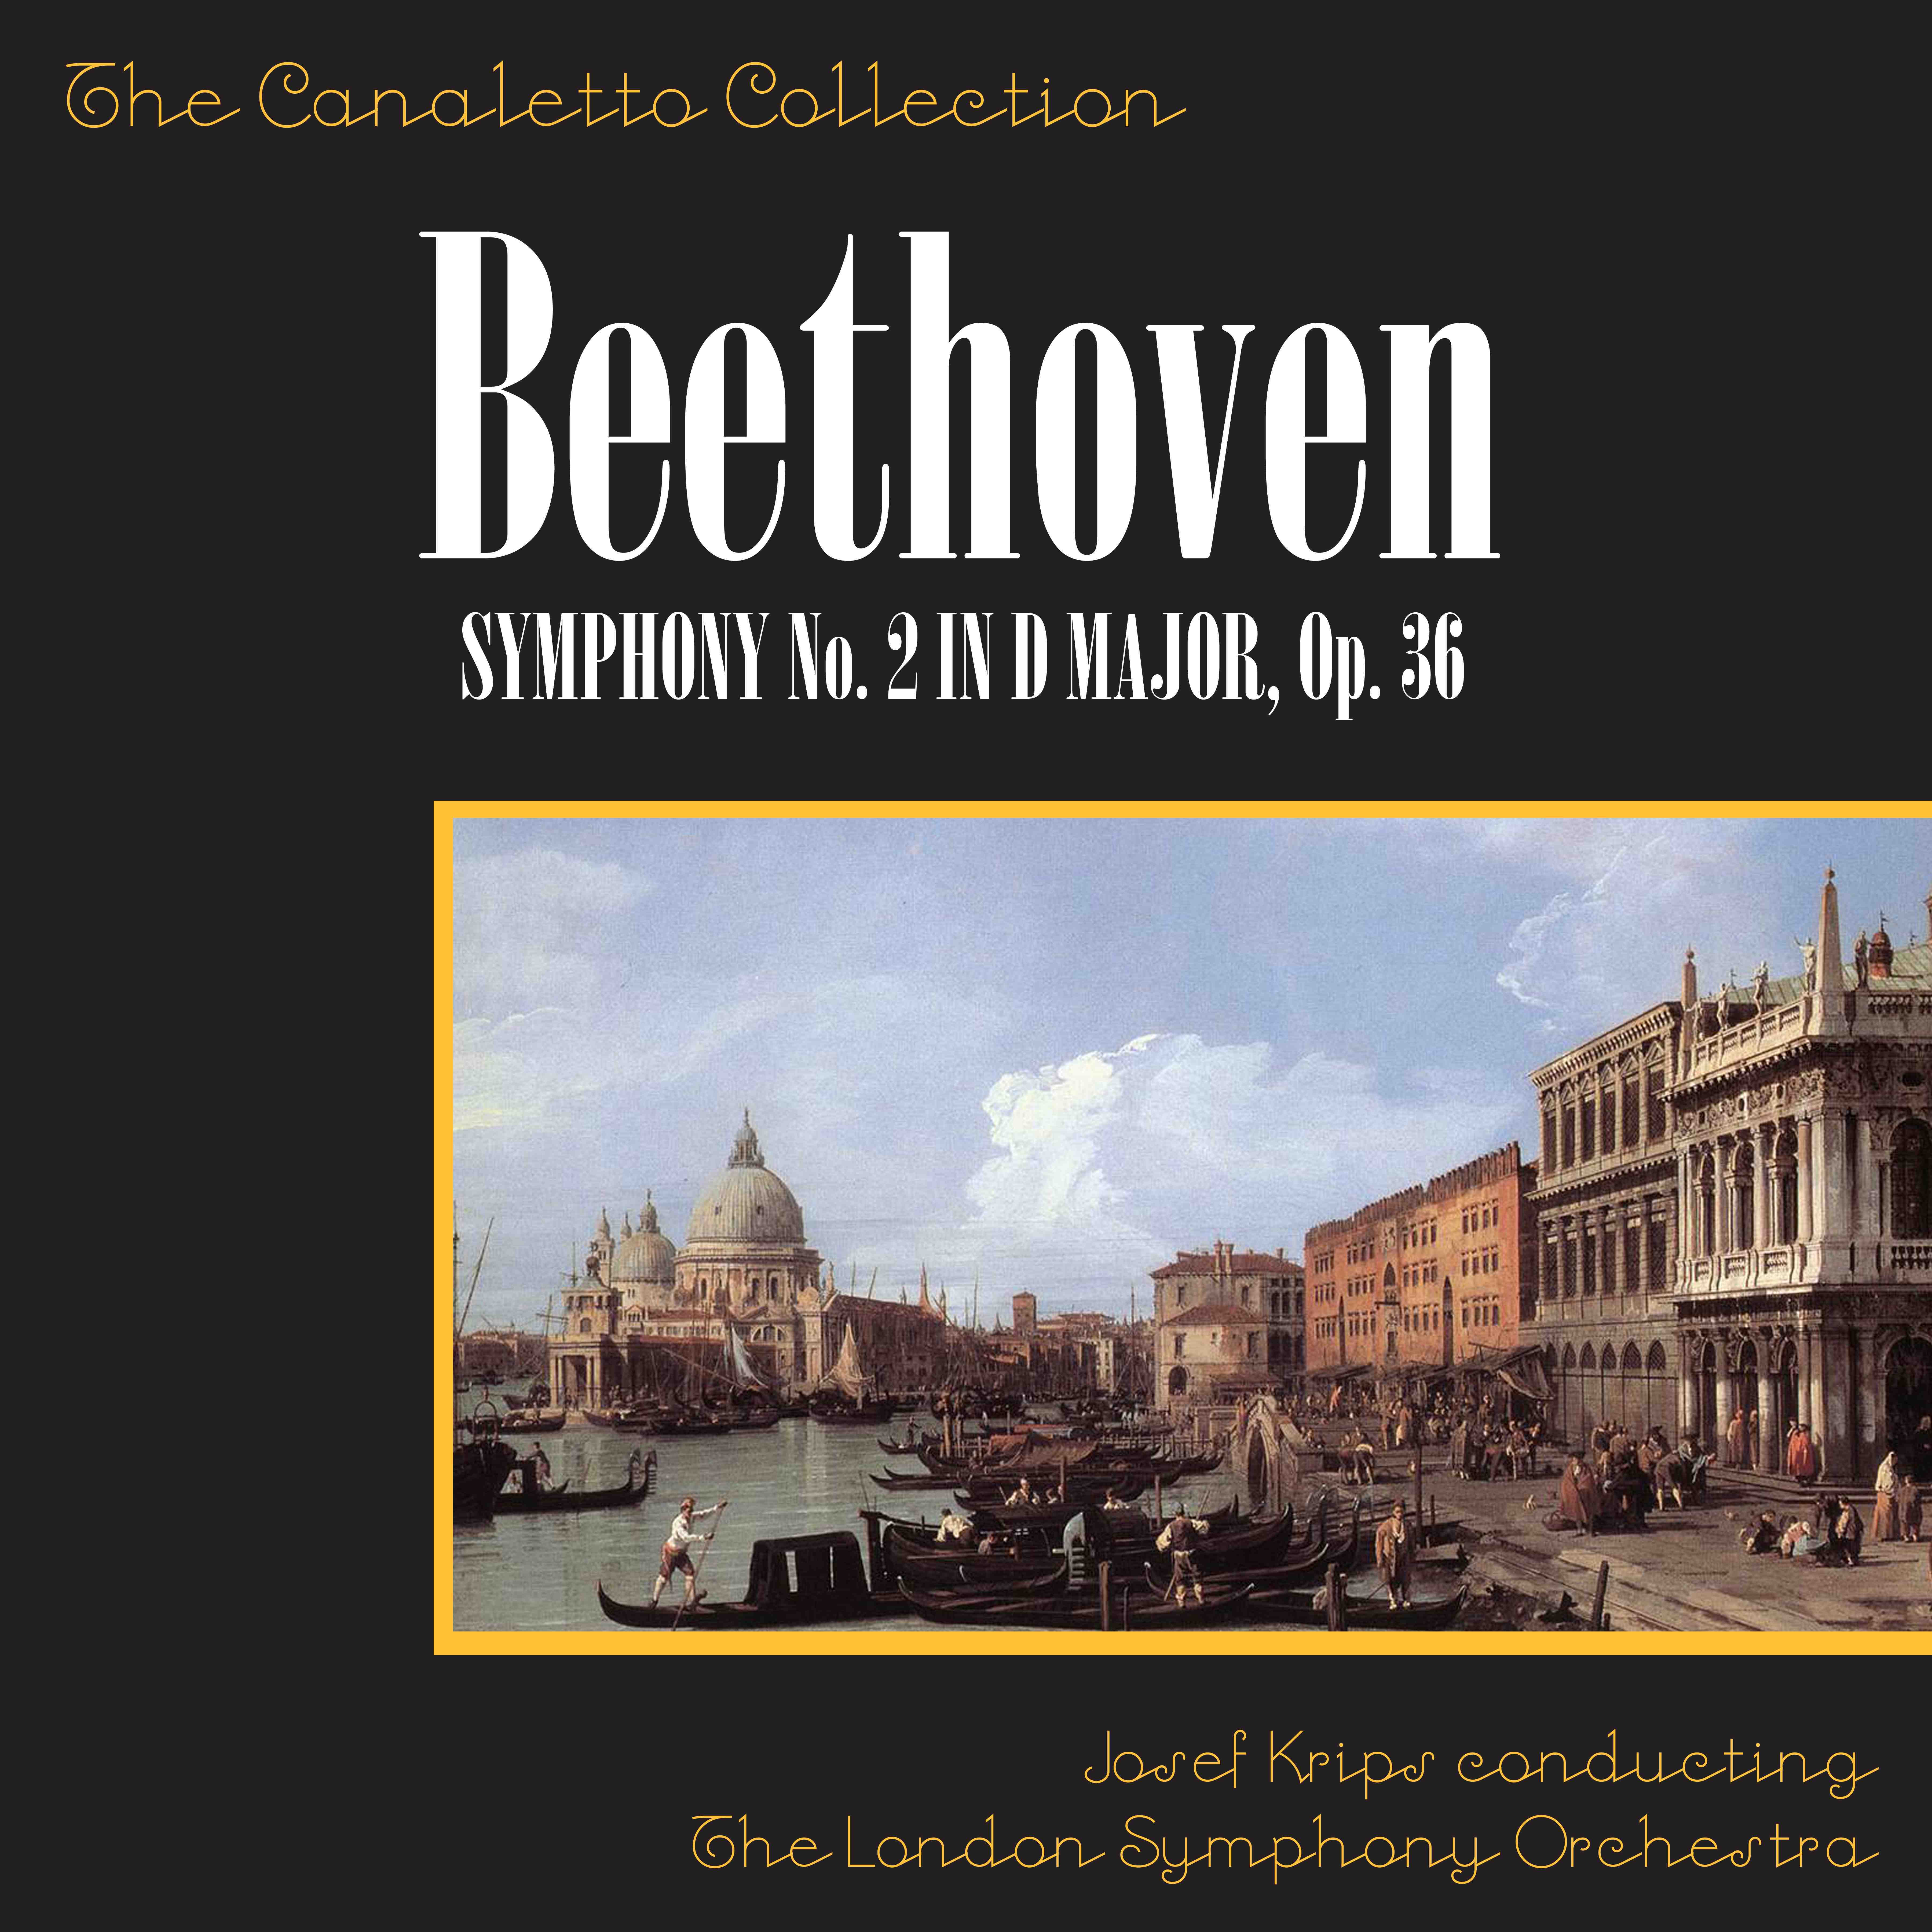 Beethoven: Symphony No. 2 In D Major, Op. 36: 3rd Movement - Scherzo